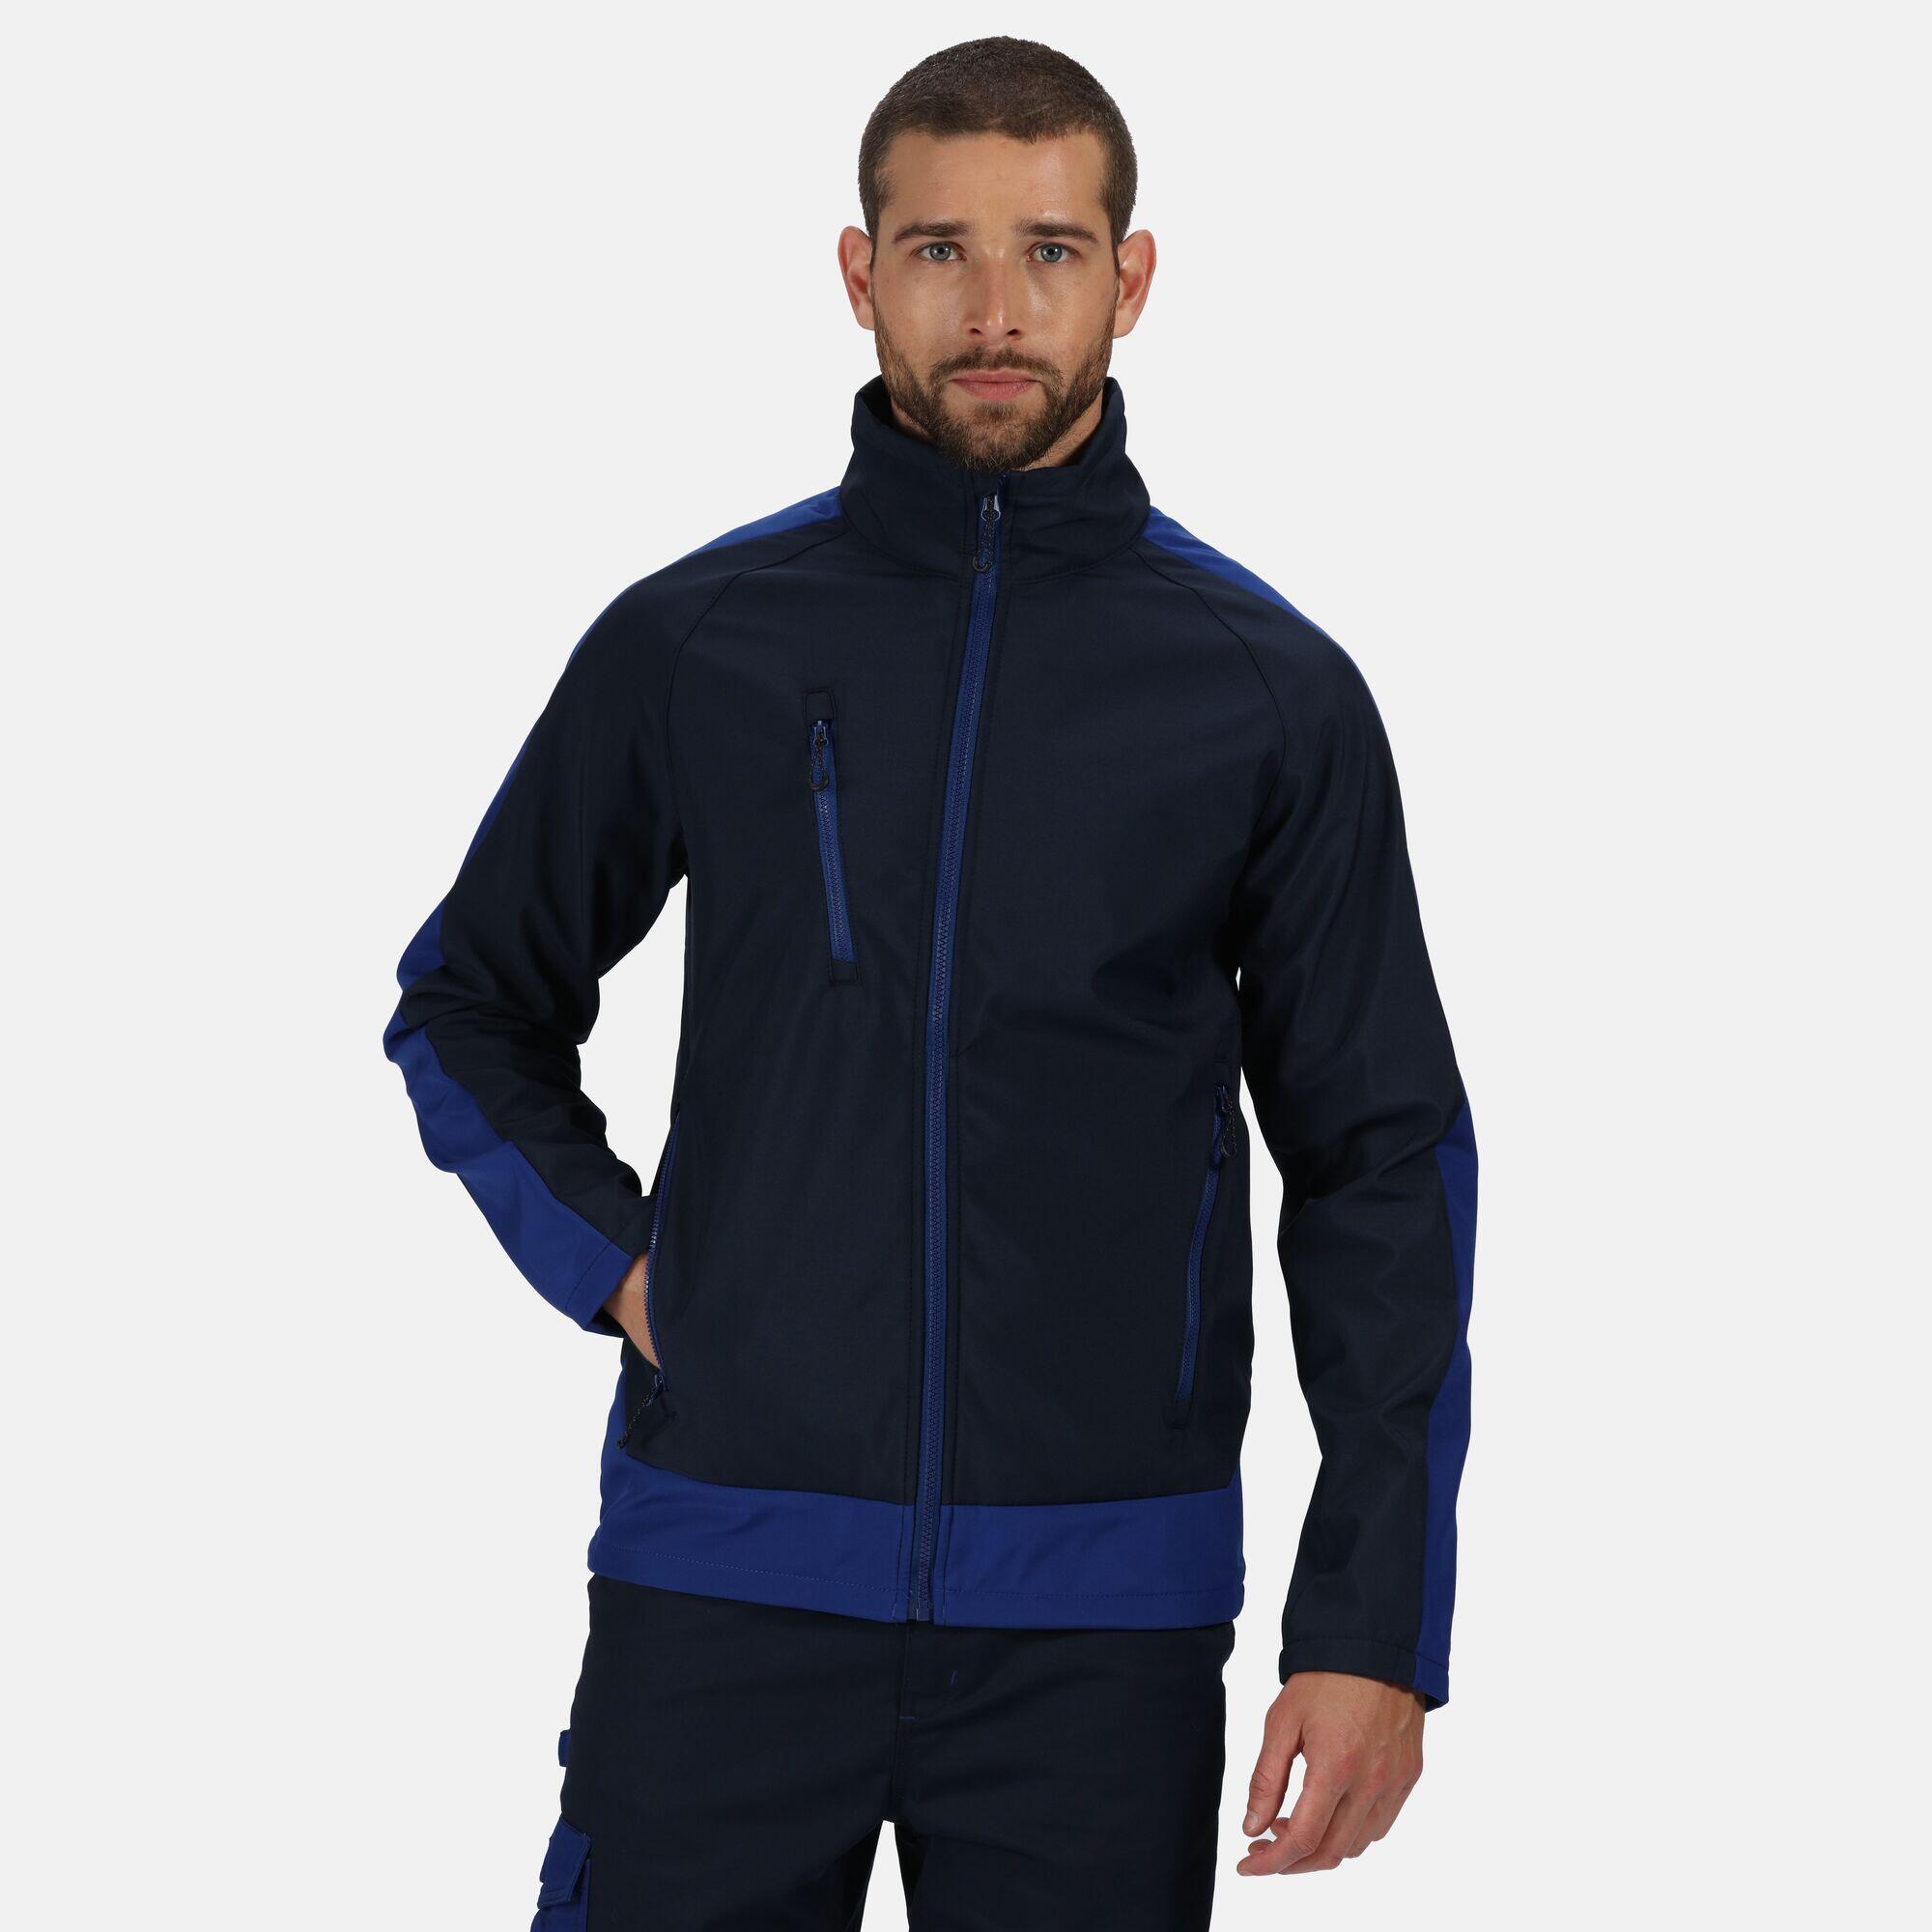 Mens Contrast 3 Layer Softshell Full Zip Jacket (Navy/New Royal Blue) 4/5